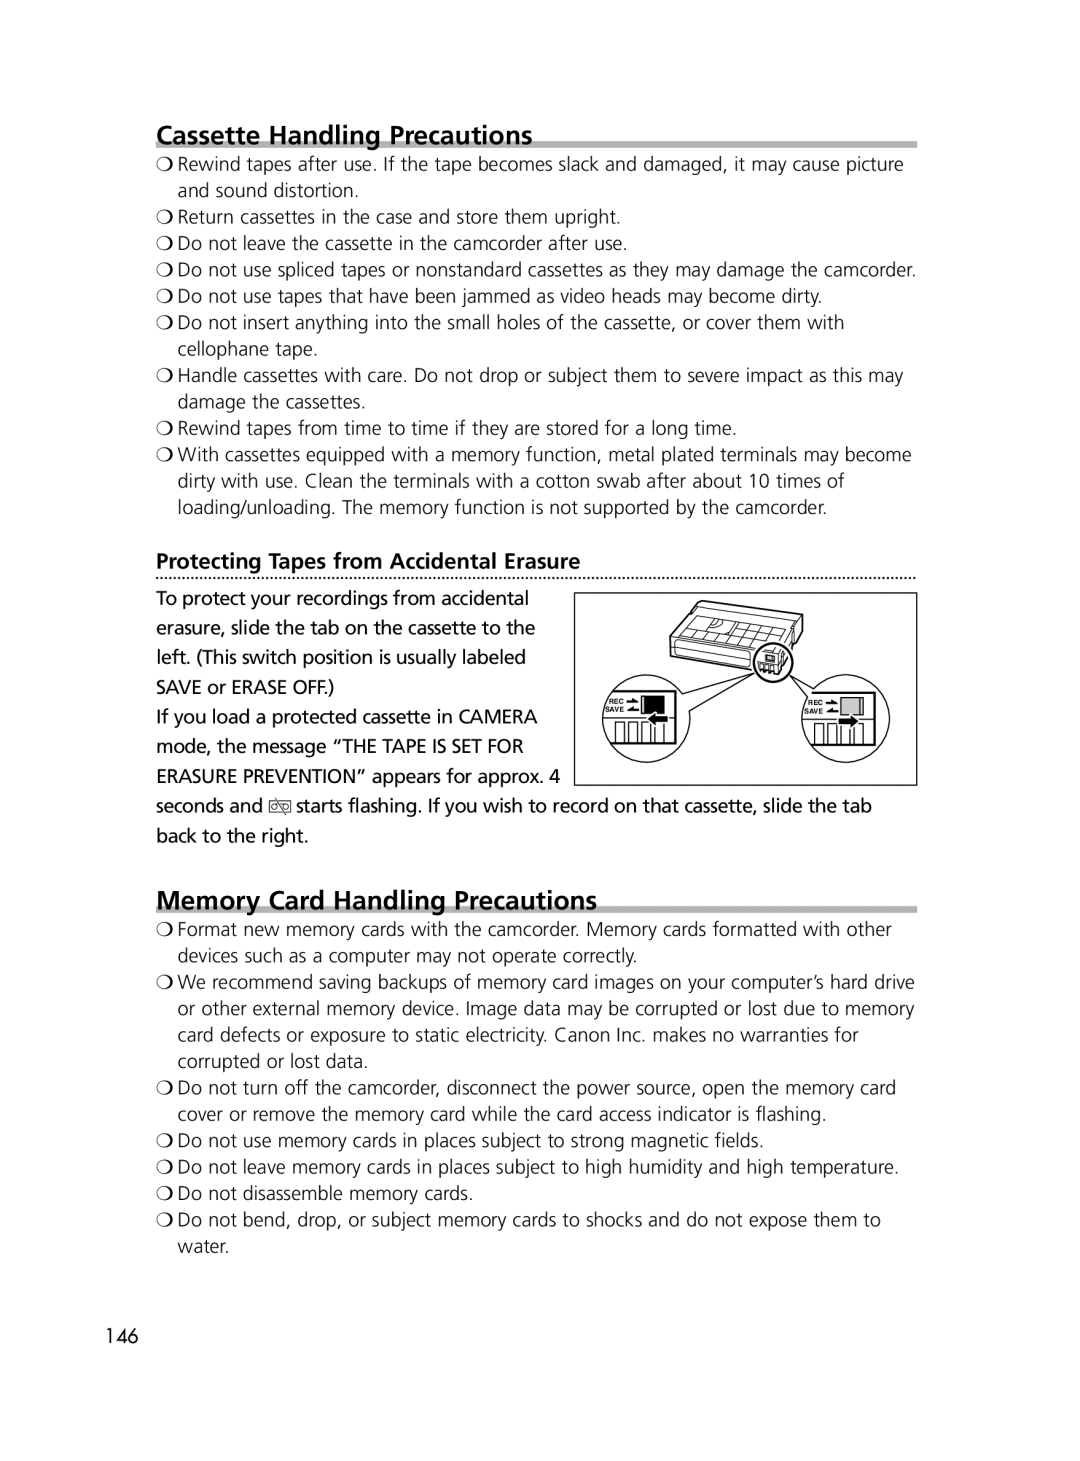 Canon 60, 65 instruction manual Cassette Handling Precautions, Memory Card Handling Precautions 